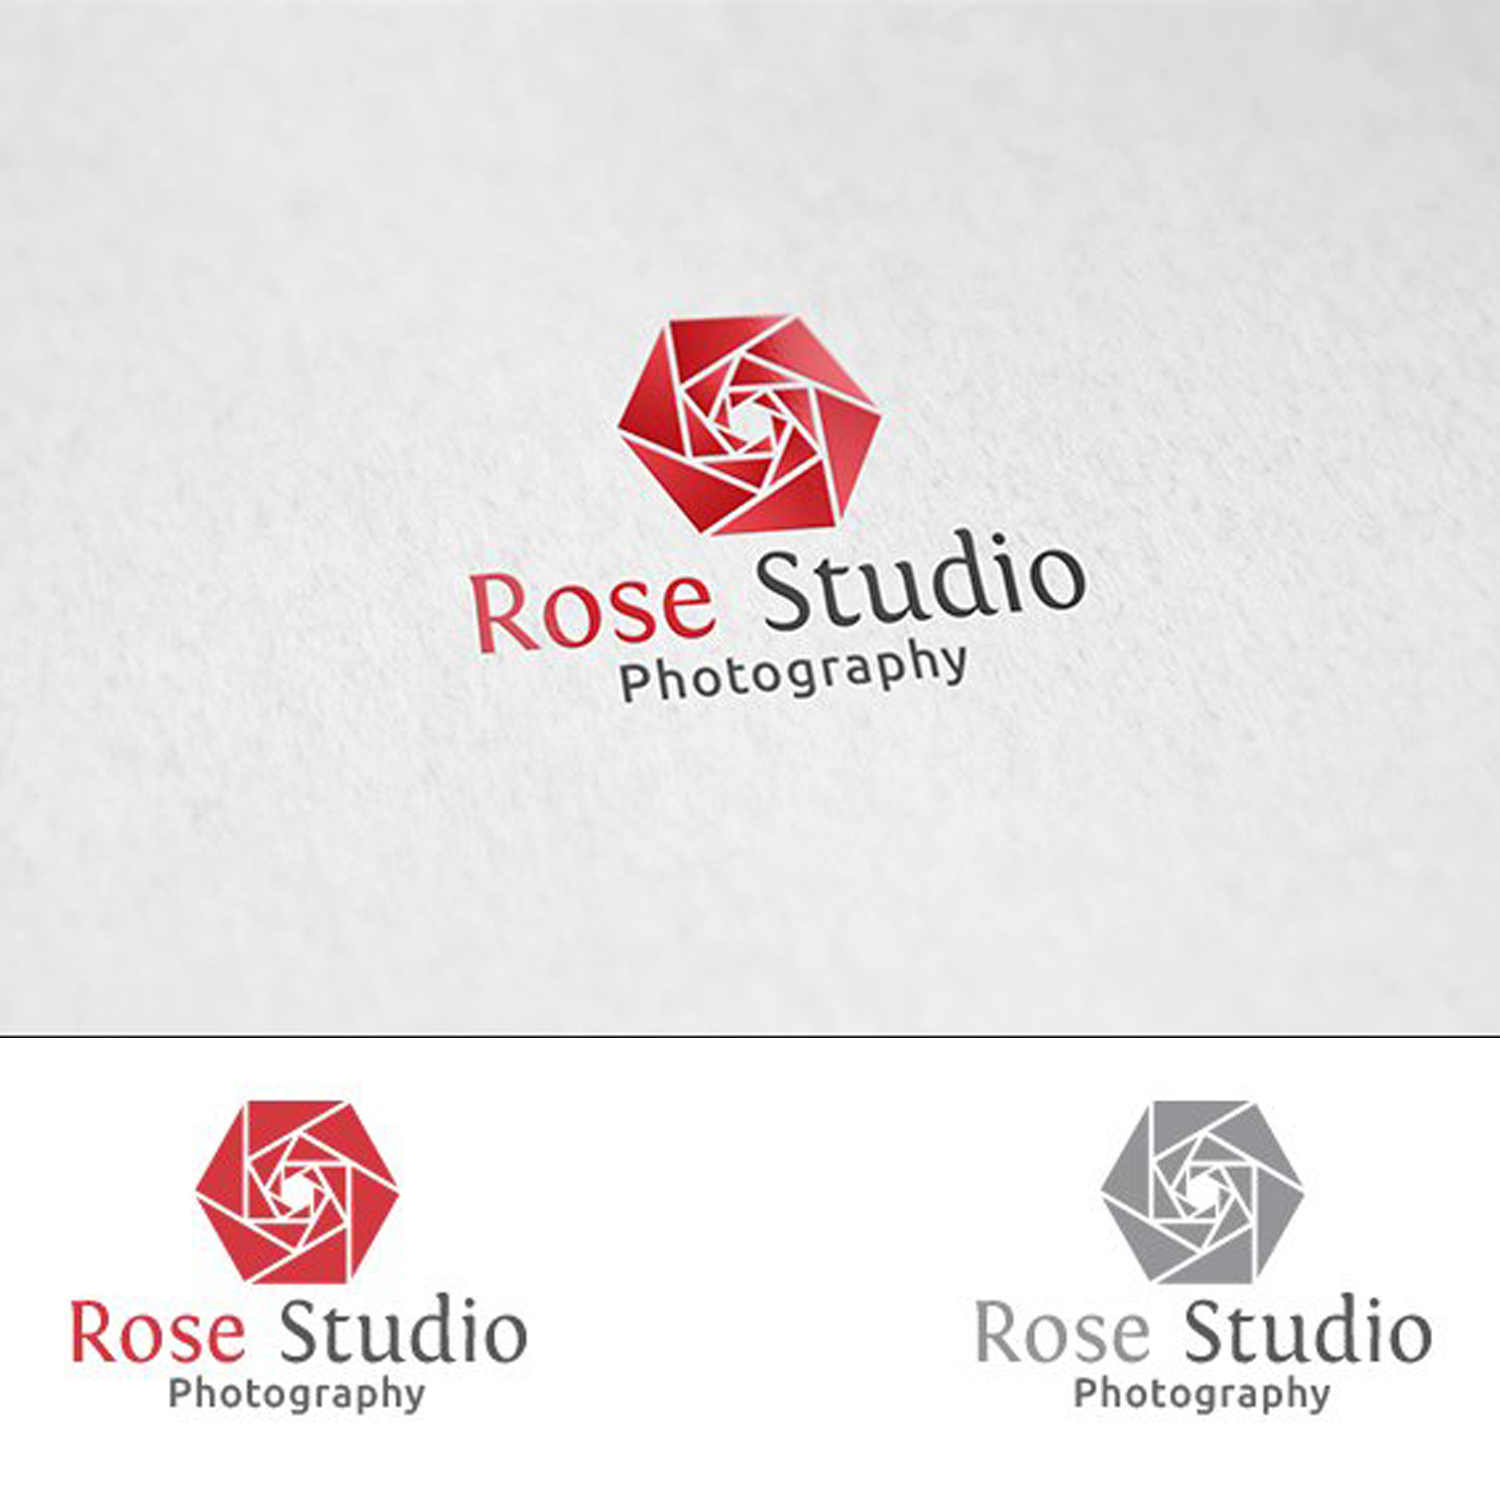 Prints of rose studio logo template.